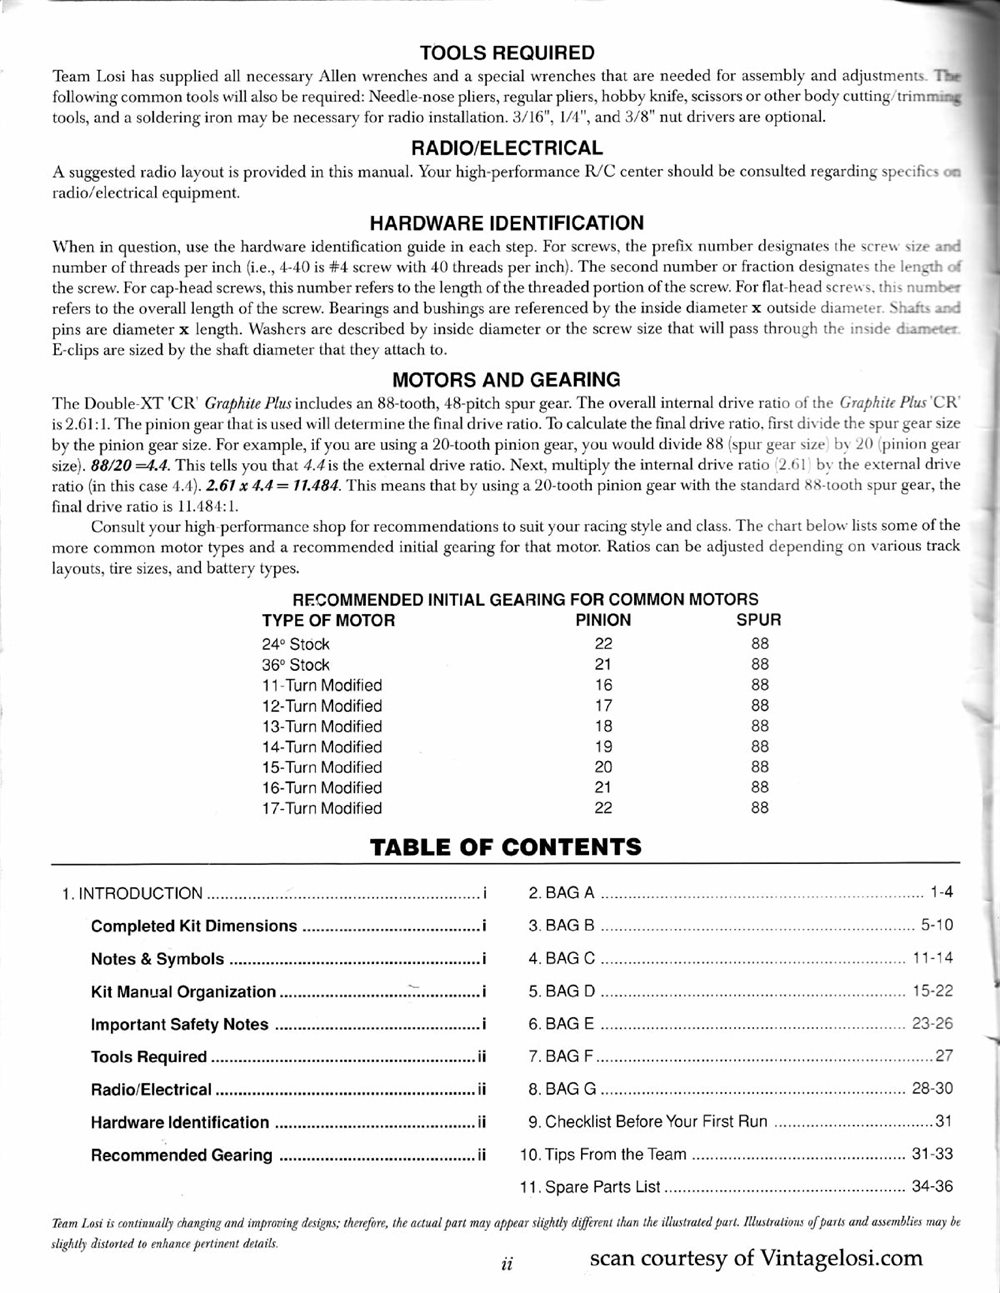 Team Losi - XXT CR Graphite Plus - Manual - Page 3